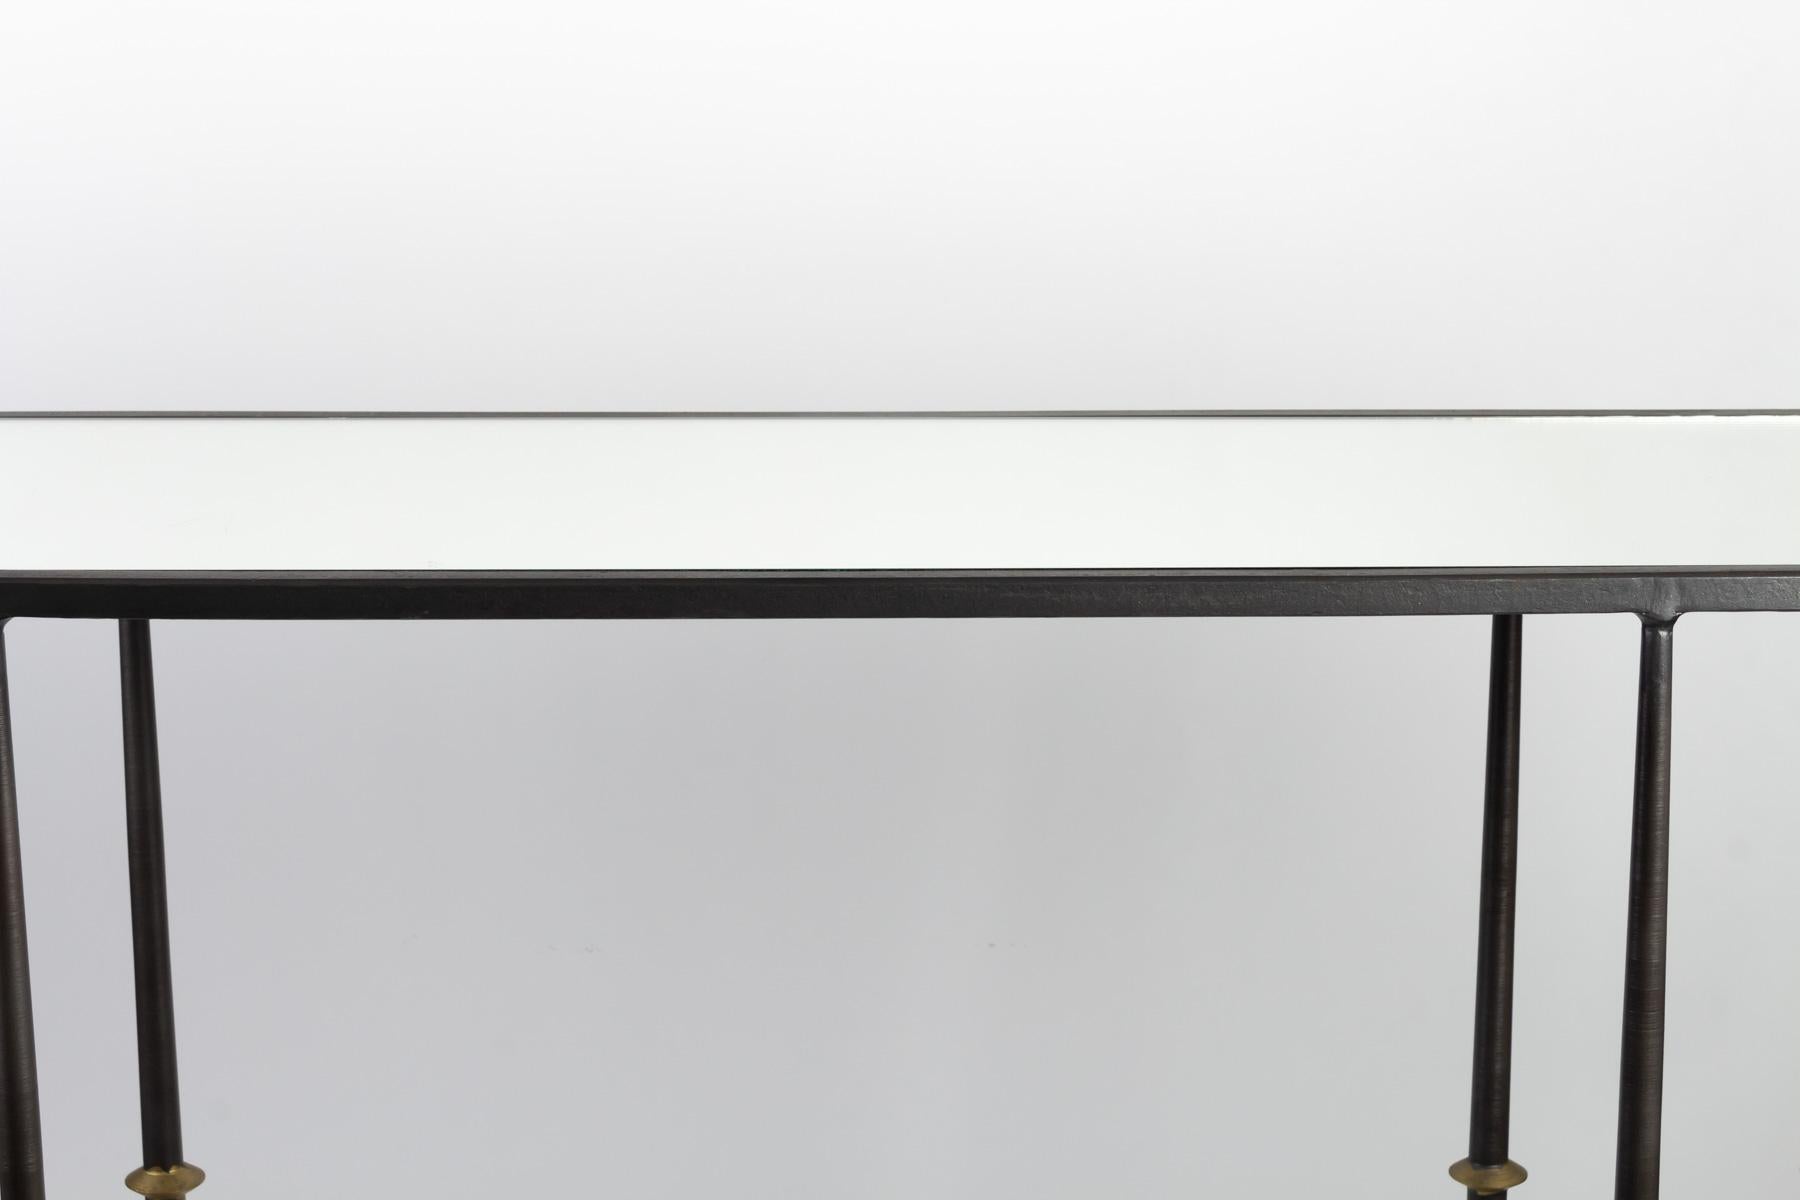 Pair of iron consoles, mirror tray. Contemporary work.
Measures: H 76 cm, W 100 cm, D 35 cm.